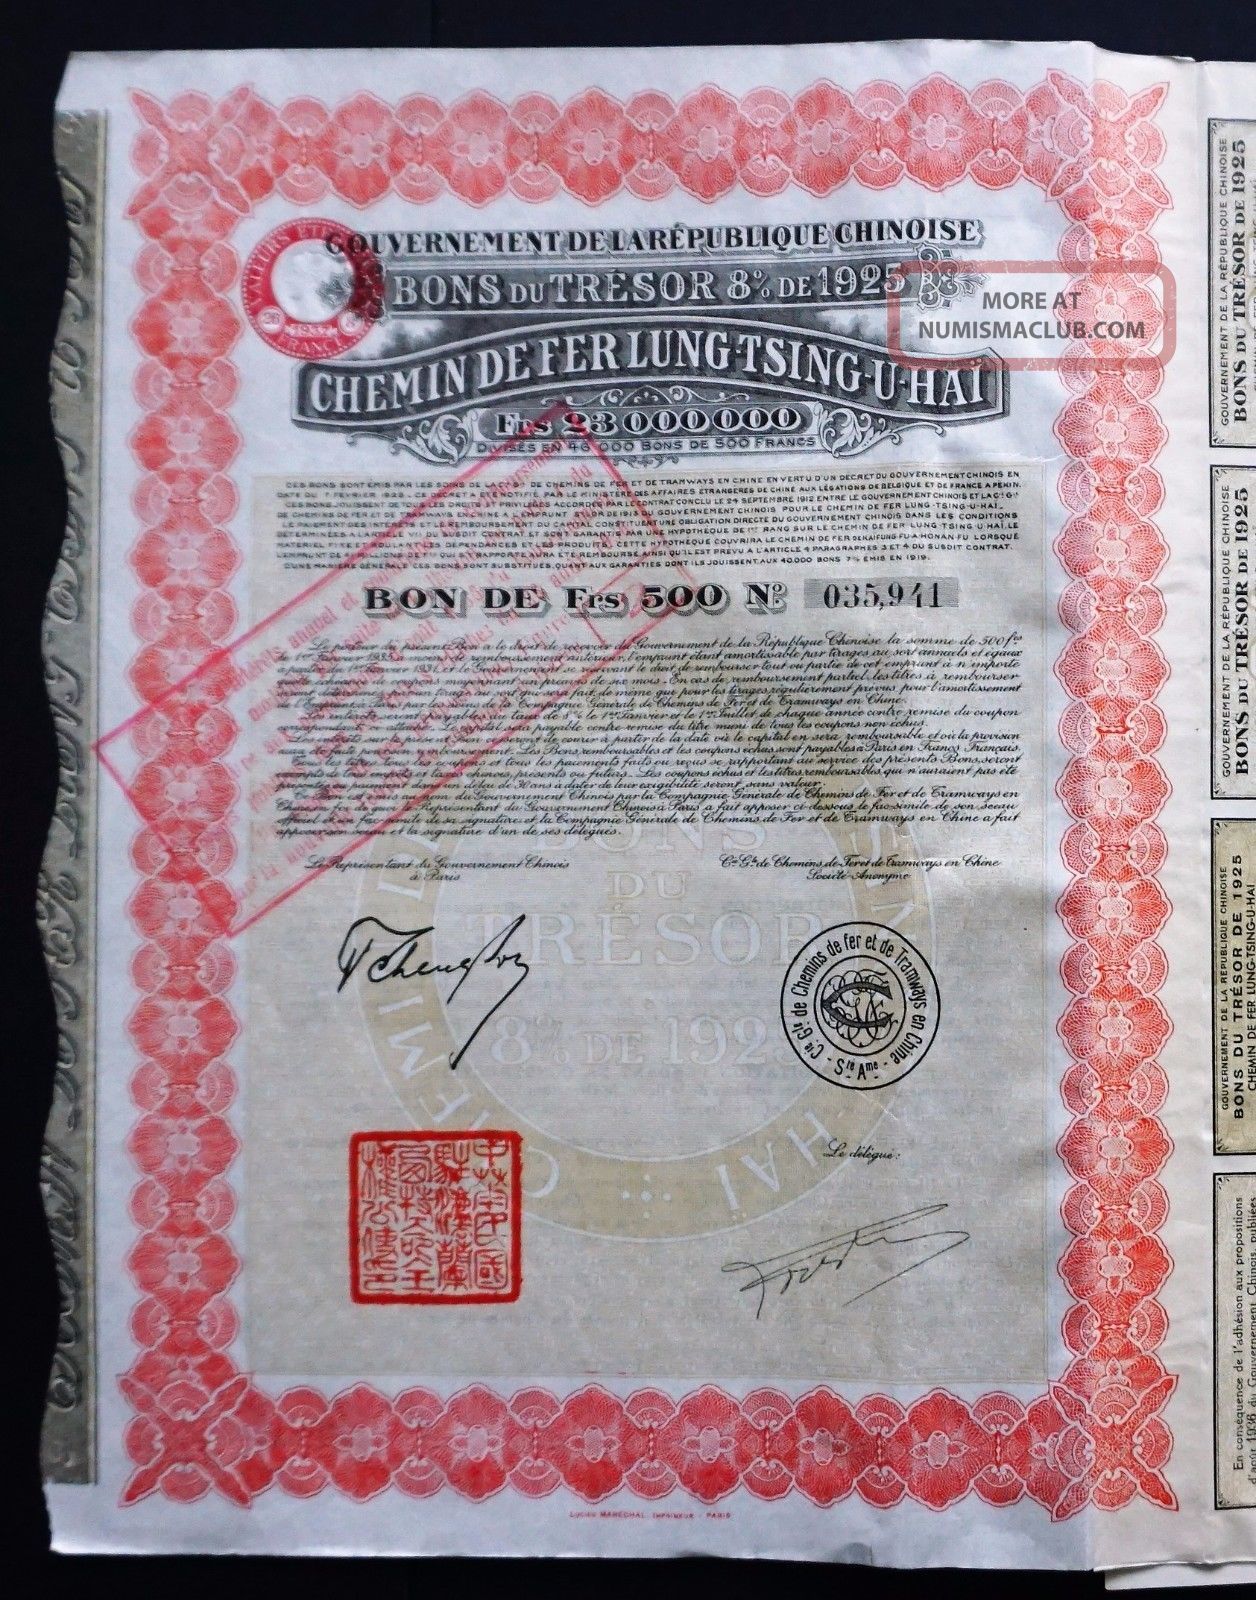 China - 8 Republic Of China - Lung Tsing U Hai 1925 - 500 Francs - Coupons World photo